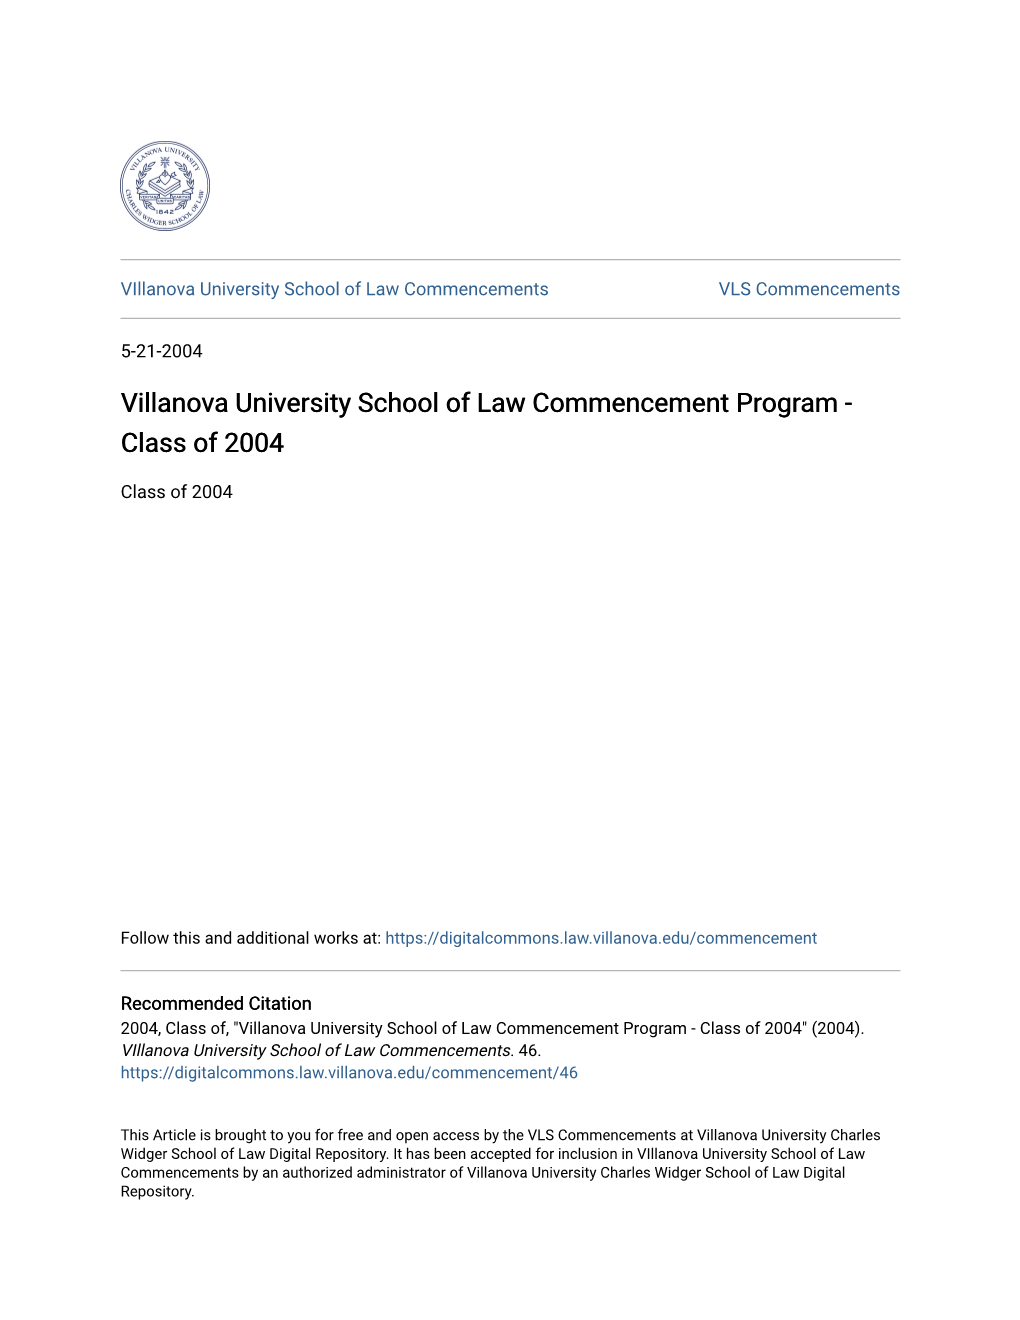 Villanova University School of Law Commencement Program - Class of 2004